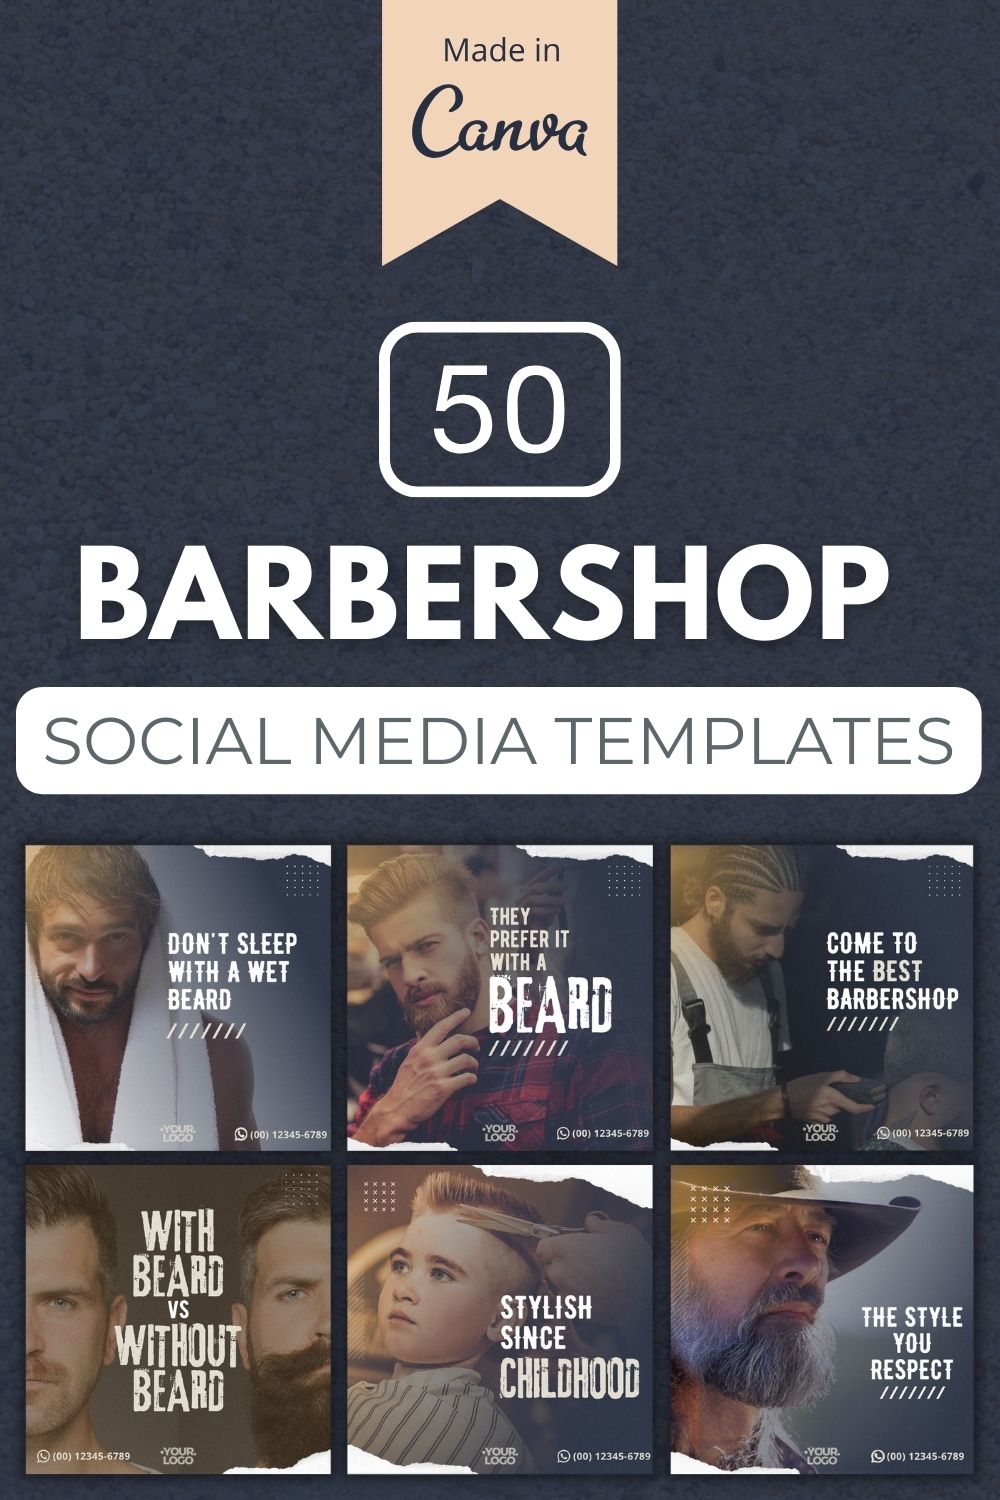 50 Barbershop Canva Templates For Social Media pinterest preview image.